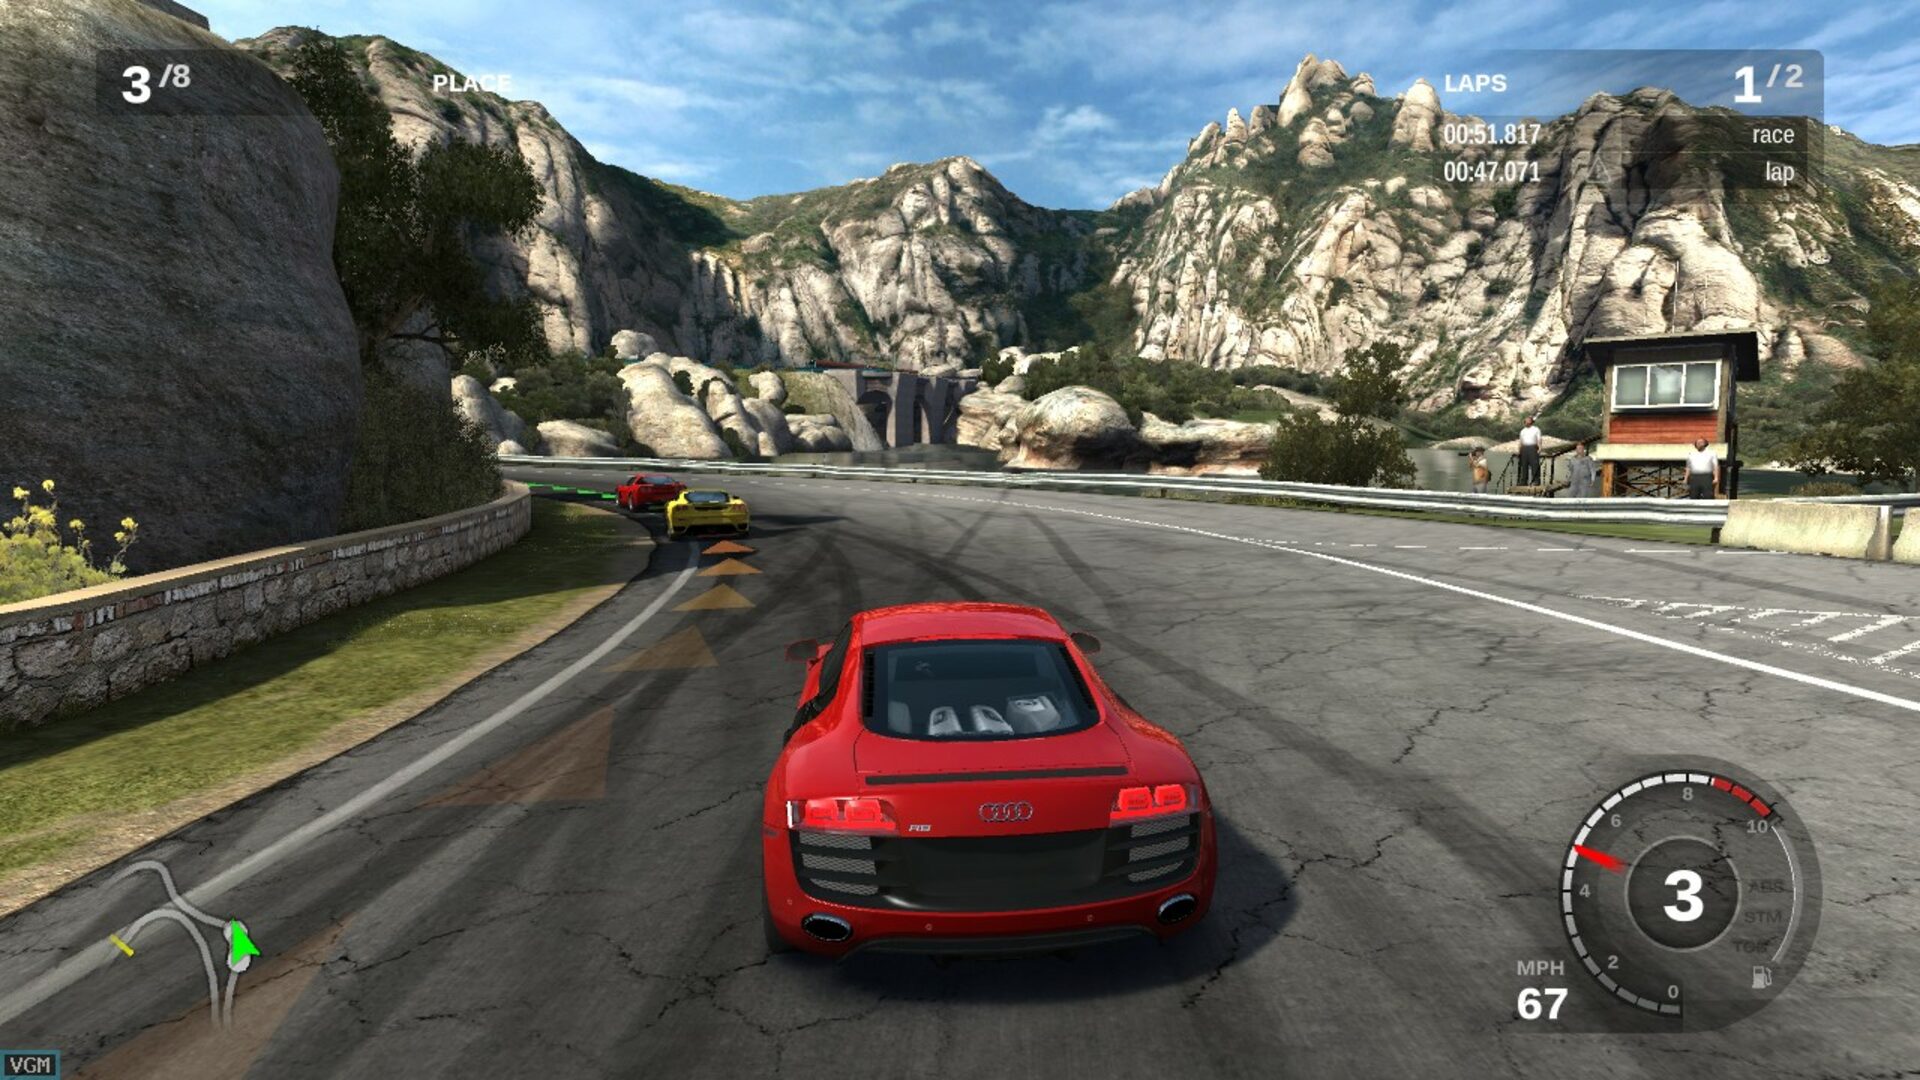 Xbox 360 racing games. Forza Motorsport 3 Xbox 360. Forza Motorsport 3 системные требования. Forza Motorsport 1 системные требования. Forza Motorsport 3 геймплей.